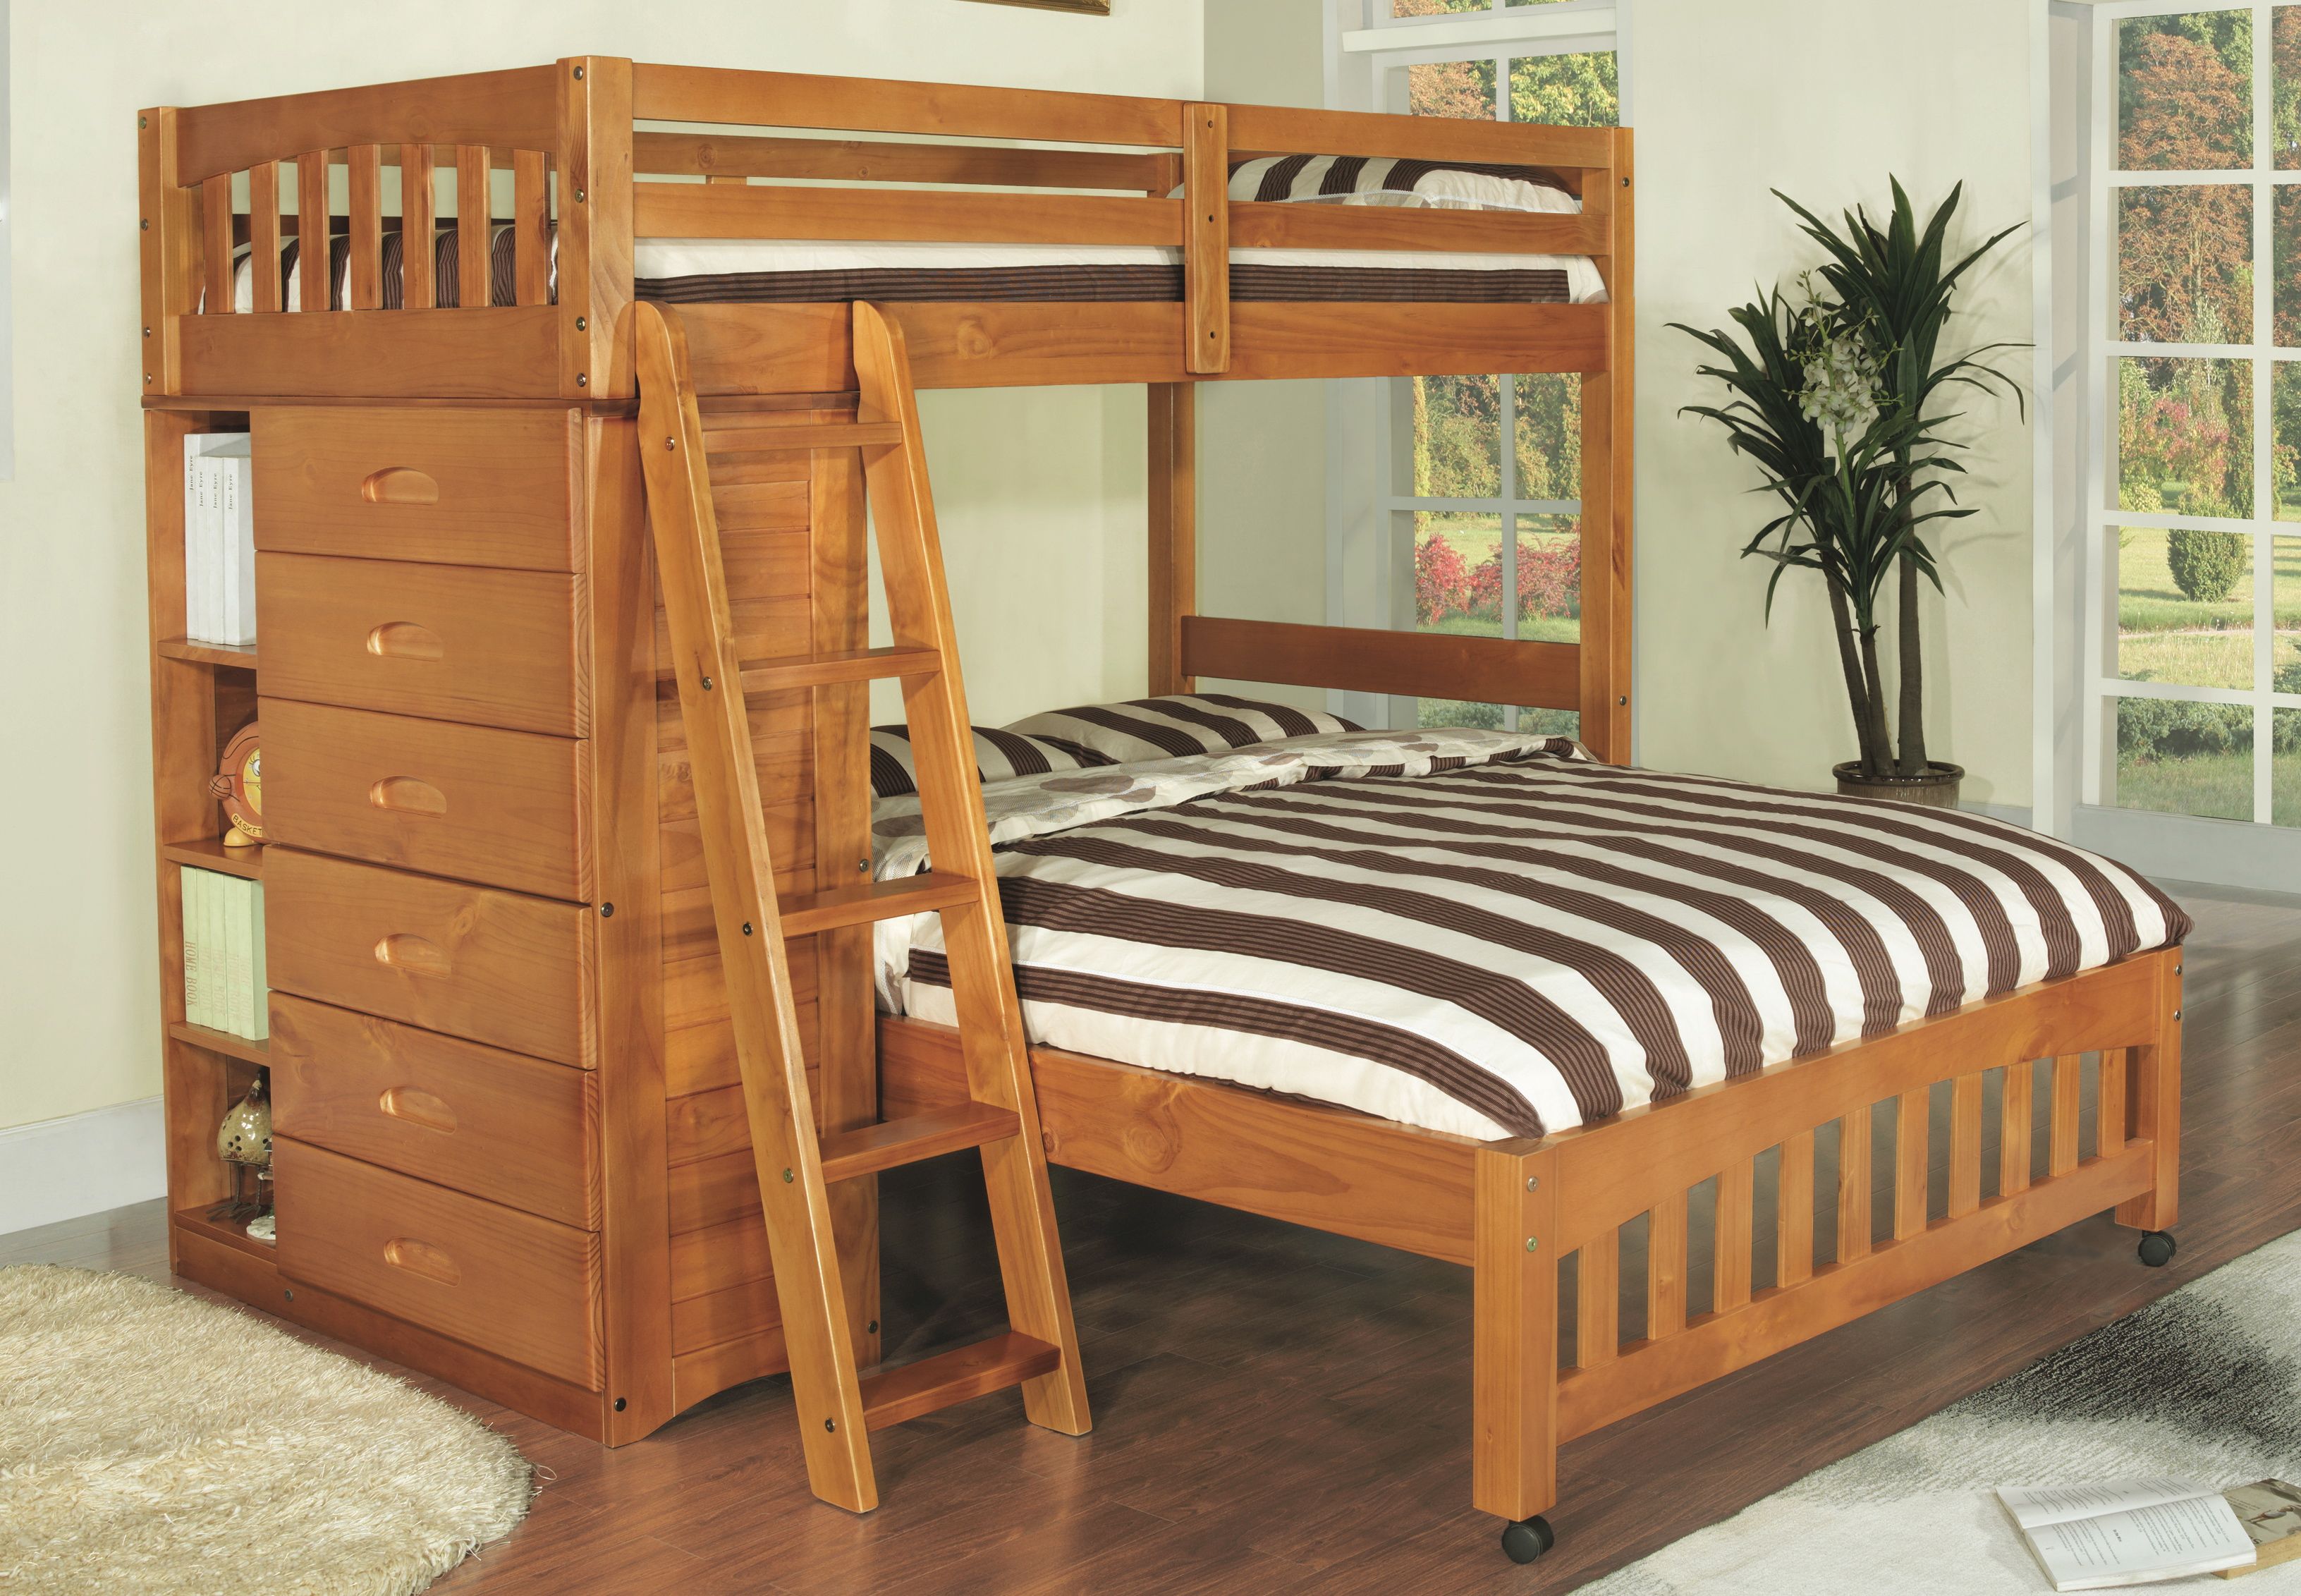 Honey Loft Bunk Beds, Your Zone Premium Twin Over Full Bunk Bed